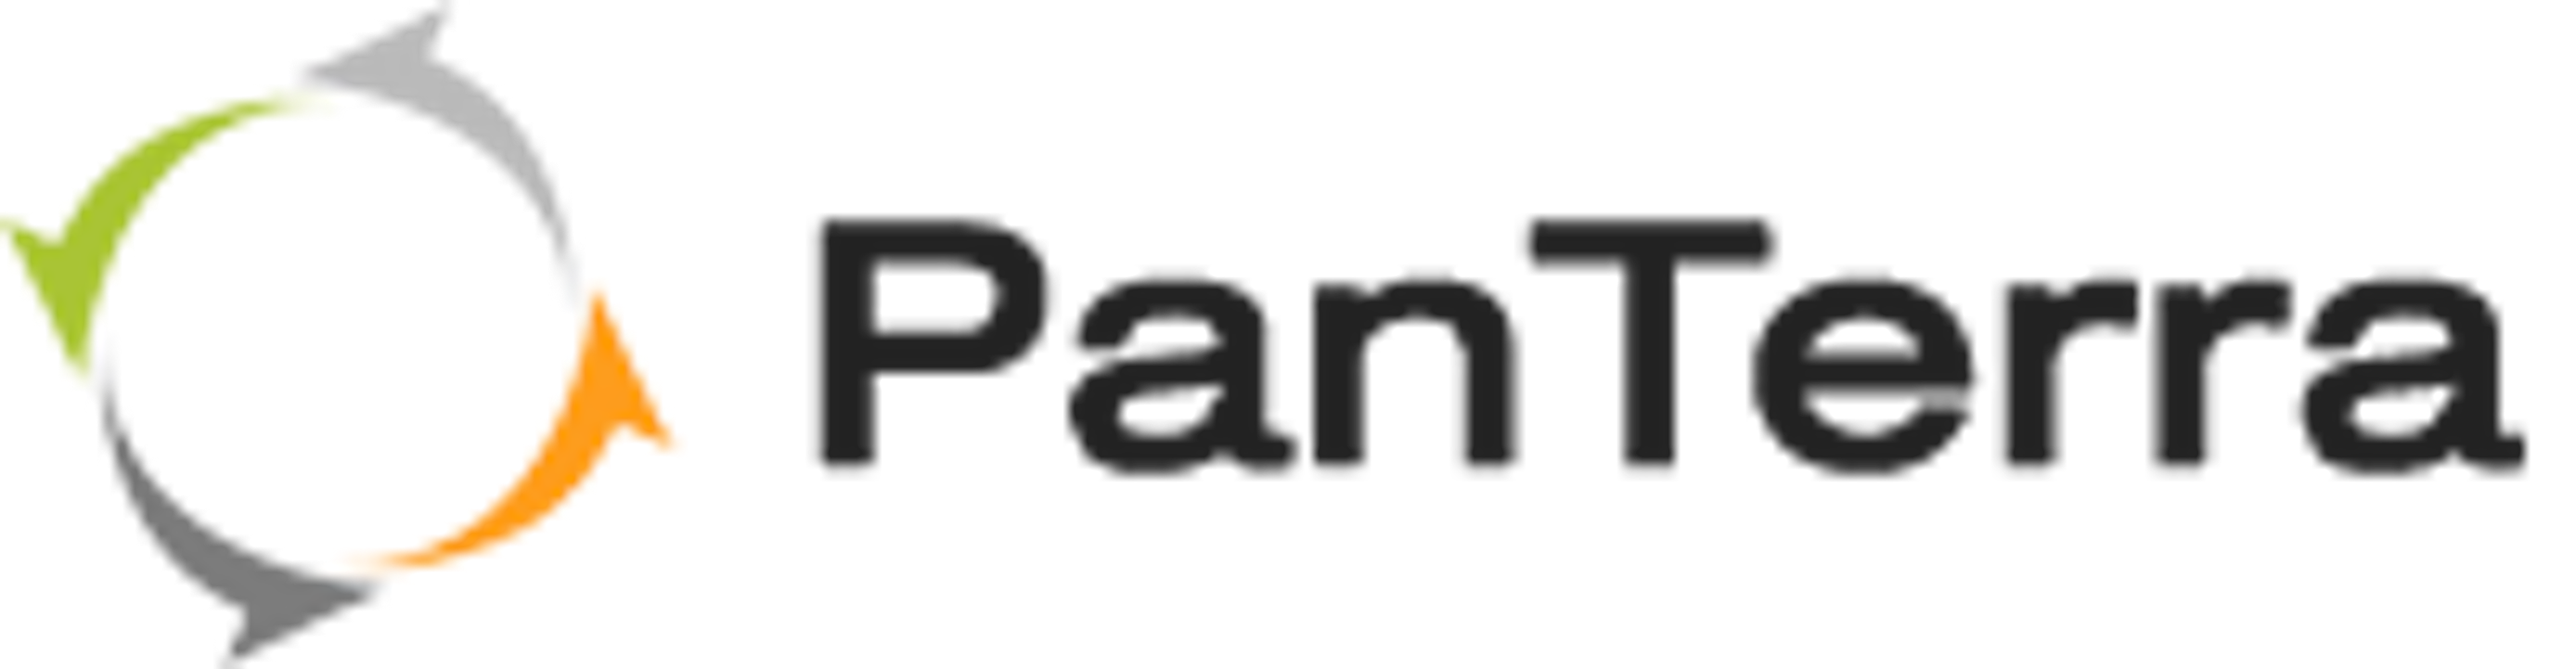 PanTerra Networks Logo